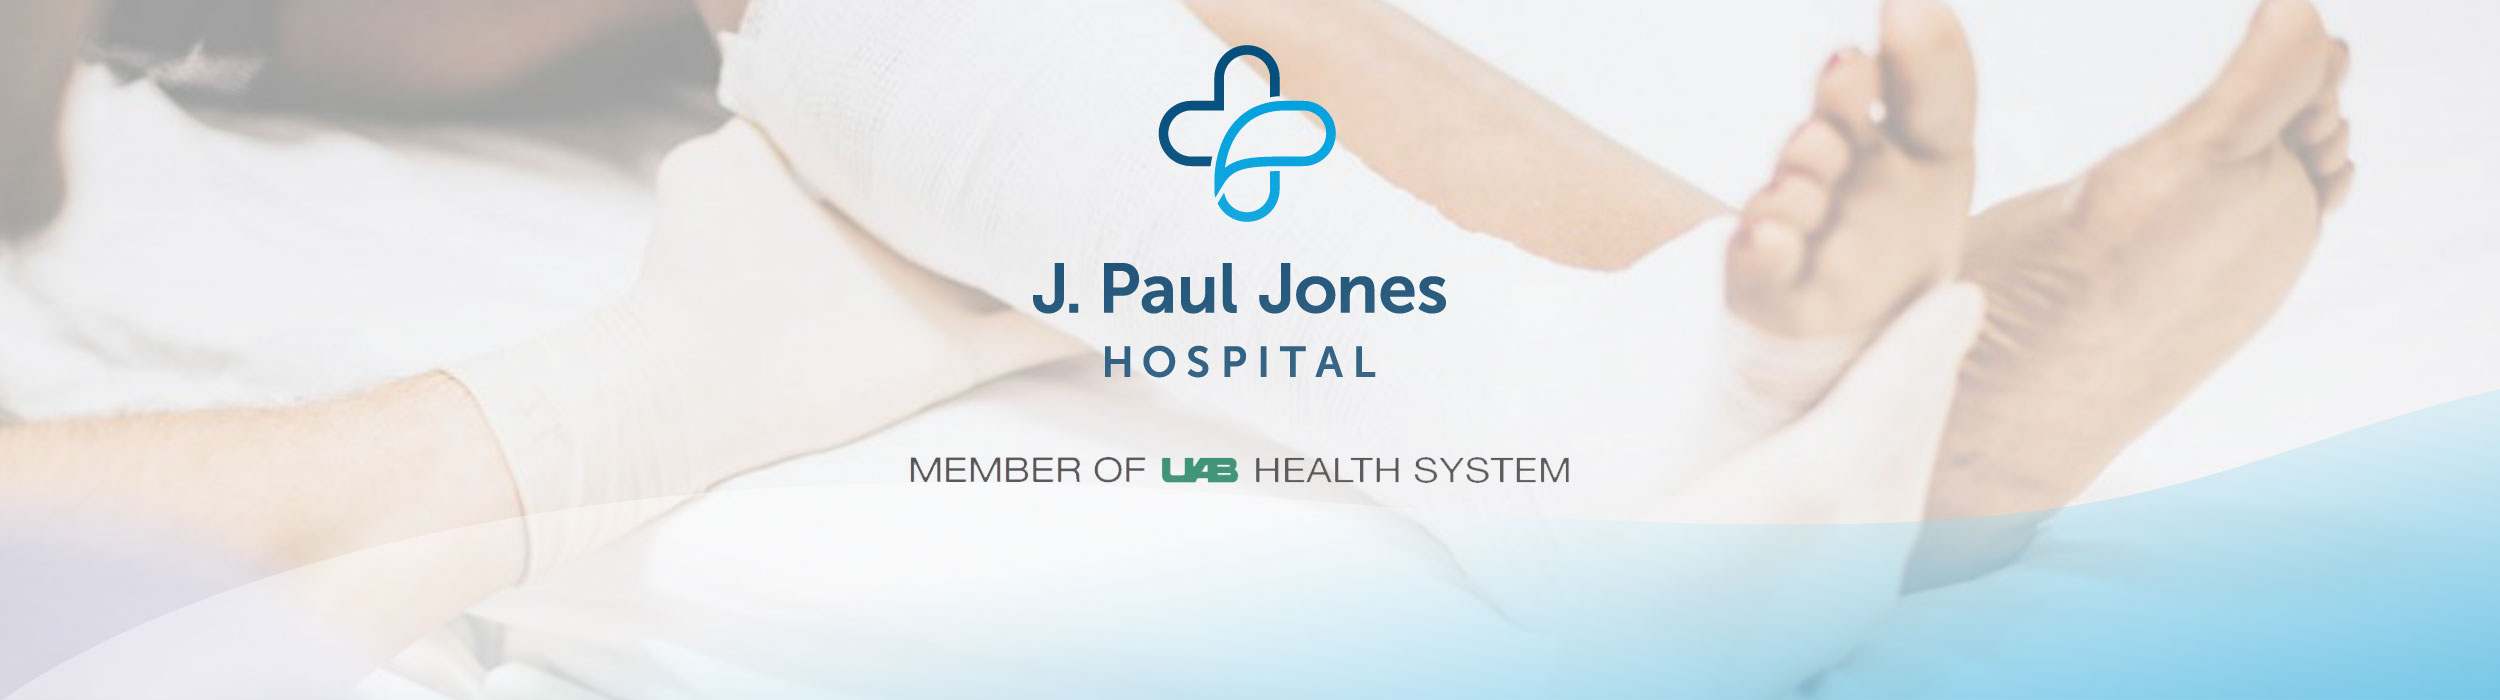 J. Paul Jones - Member of UAB Health System - Homepage Sliding Image of Patients Leg Being Treated